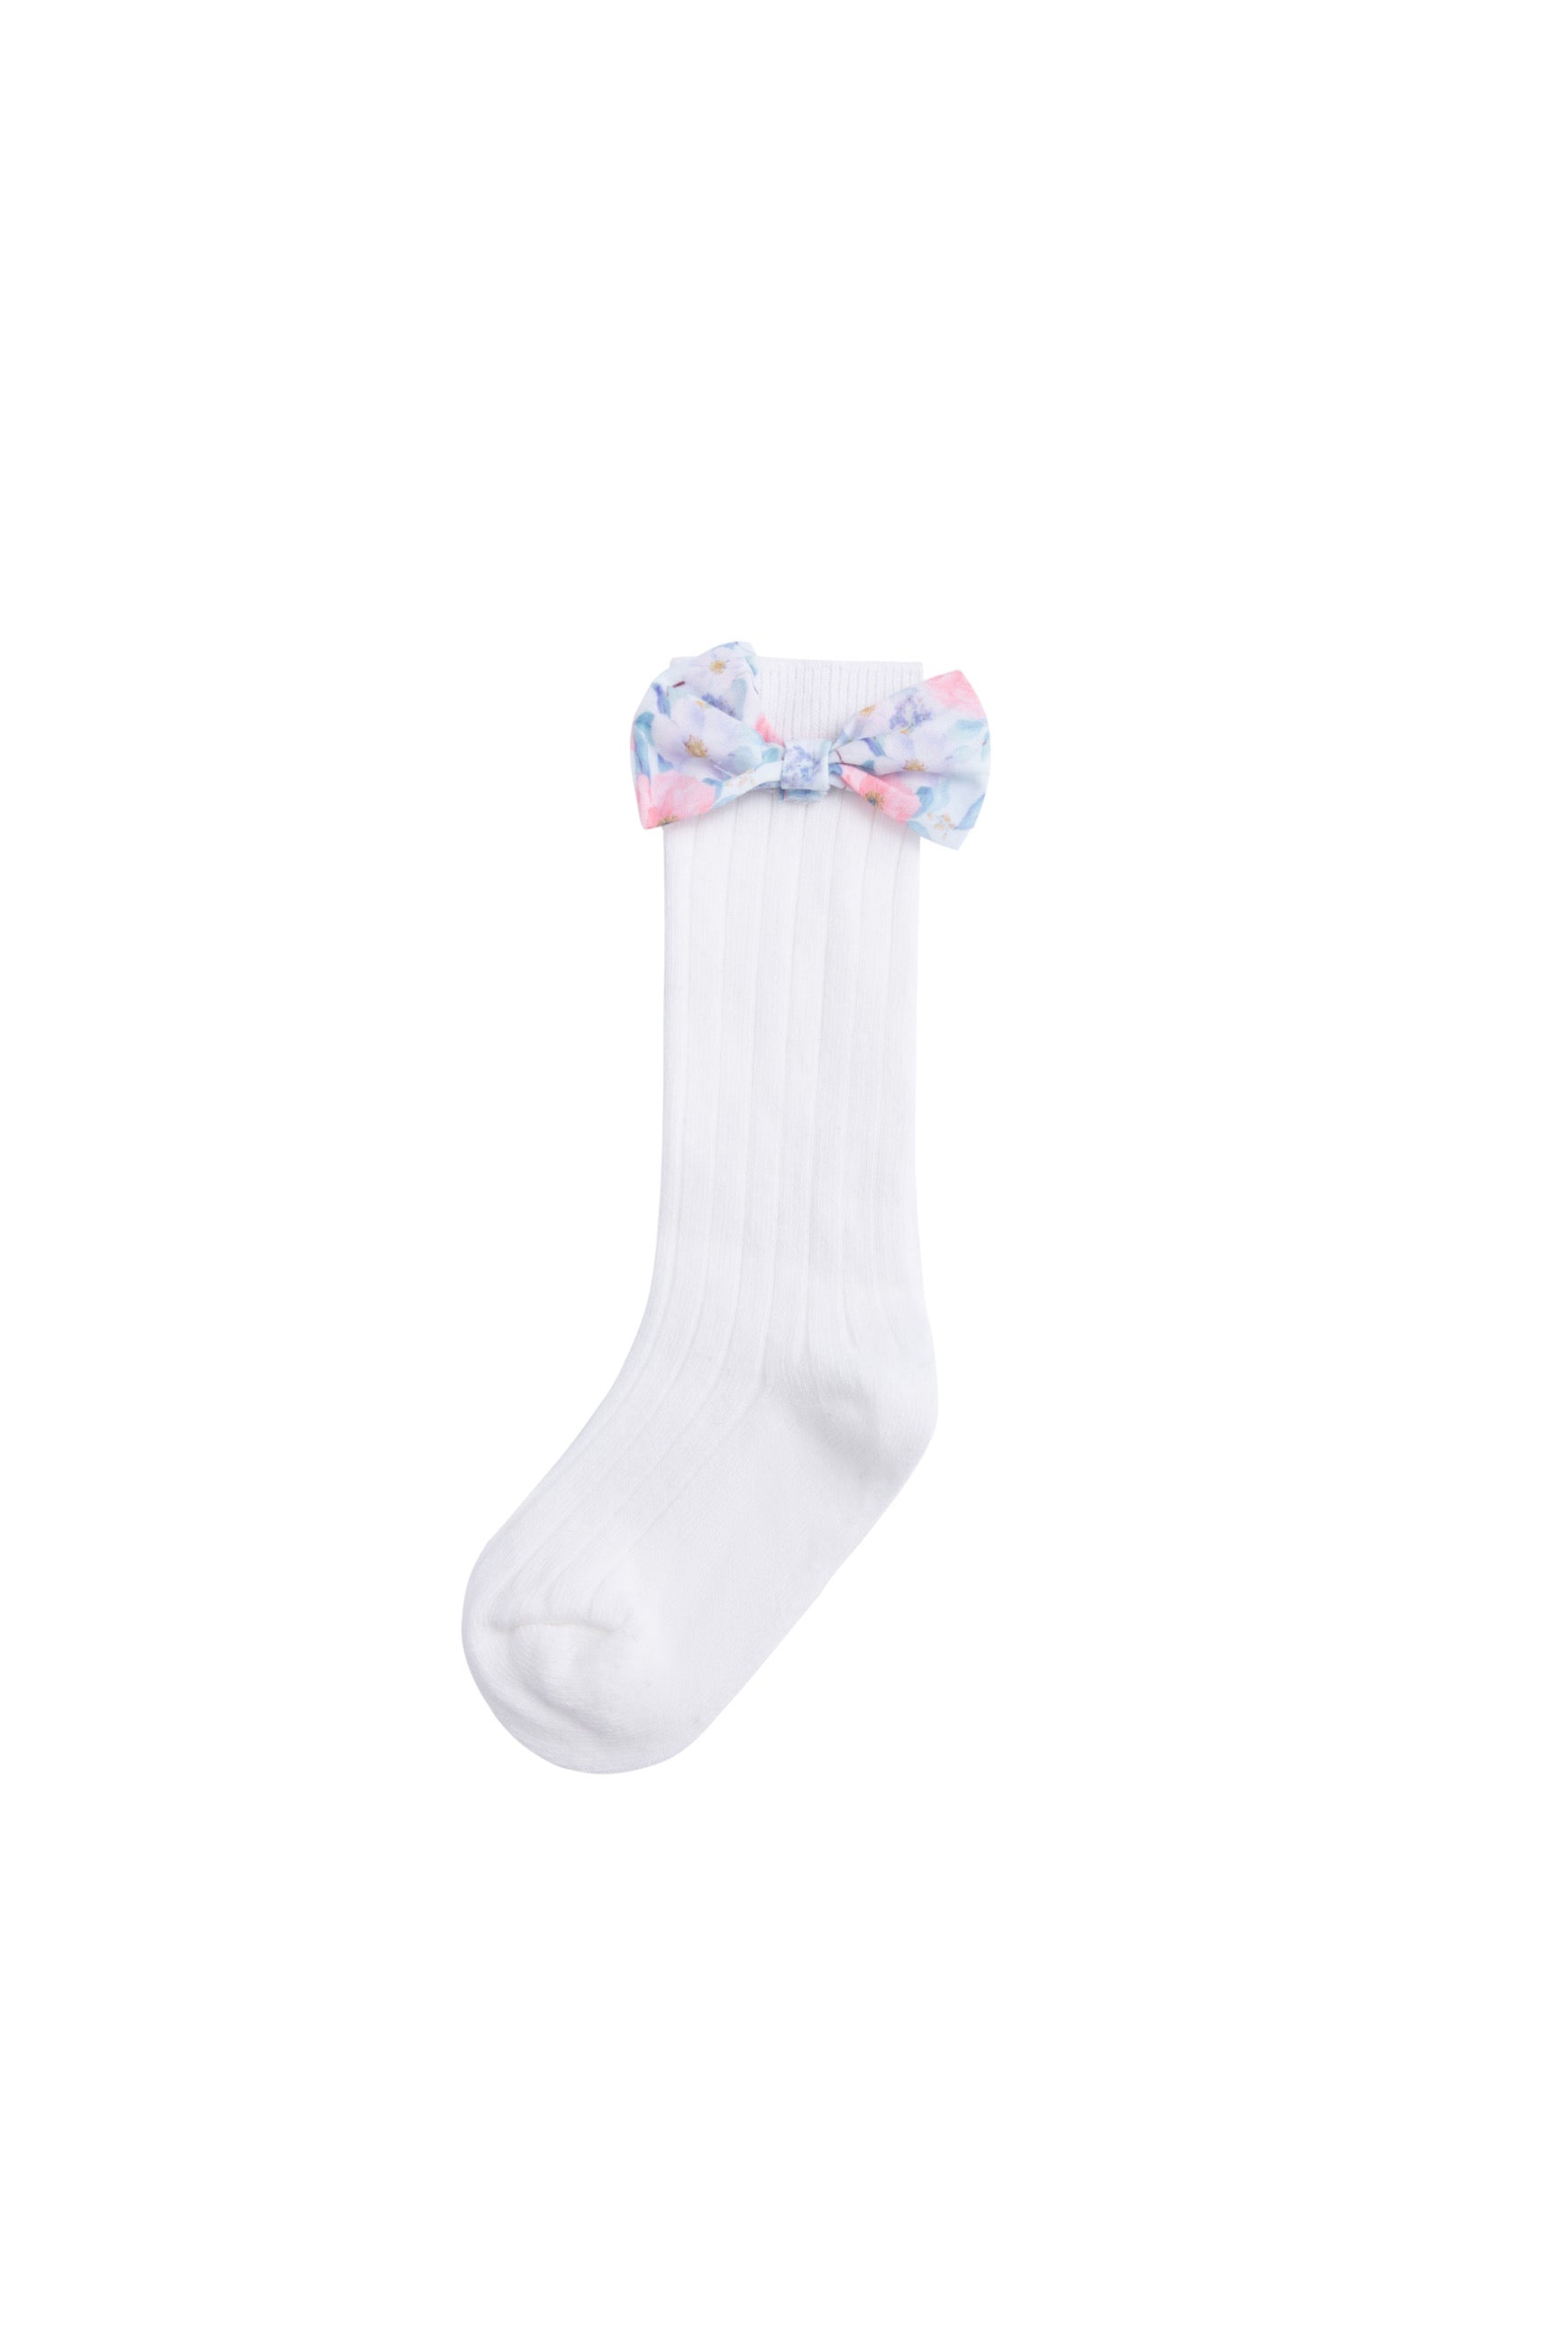 Matching bow socks